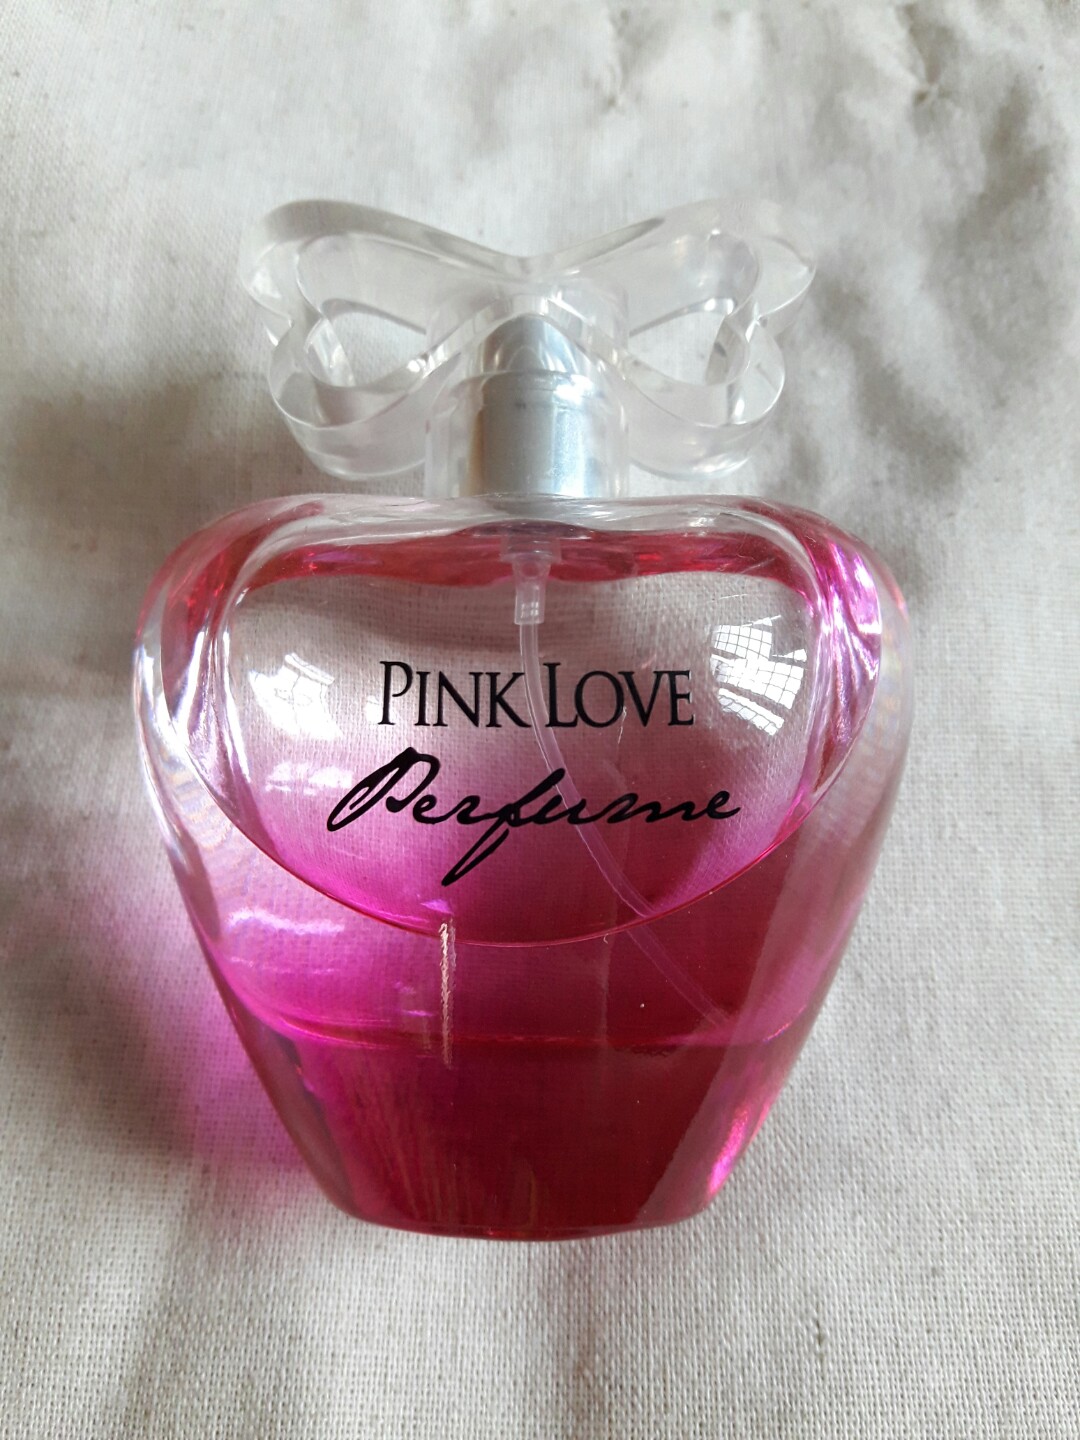 miniso pink love perfume price